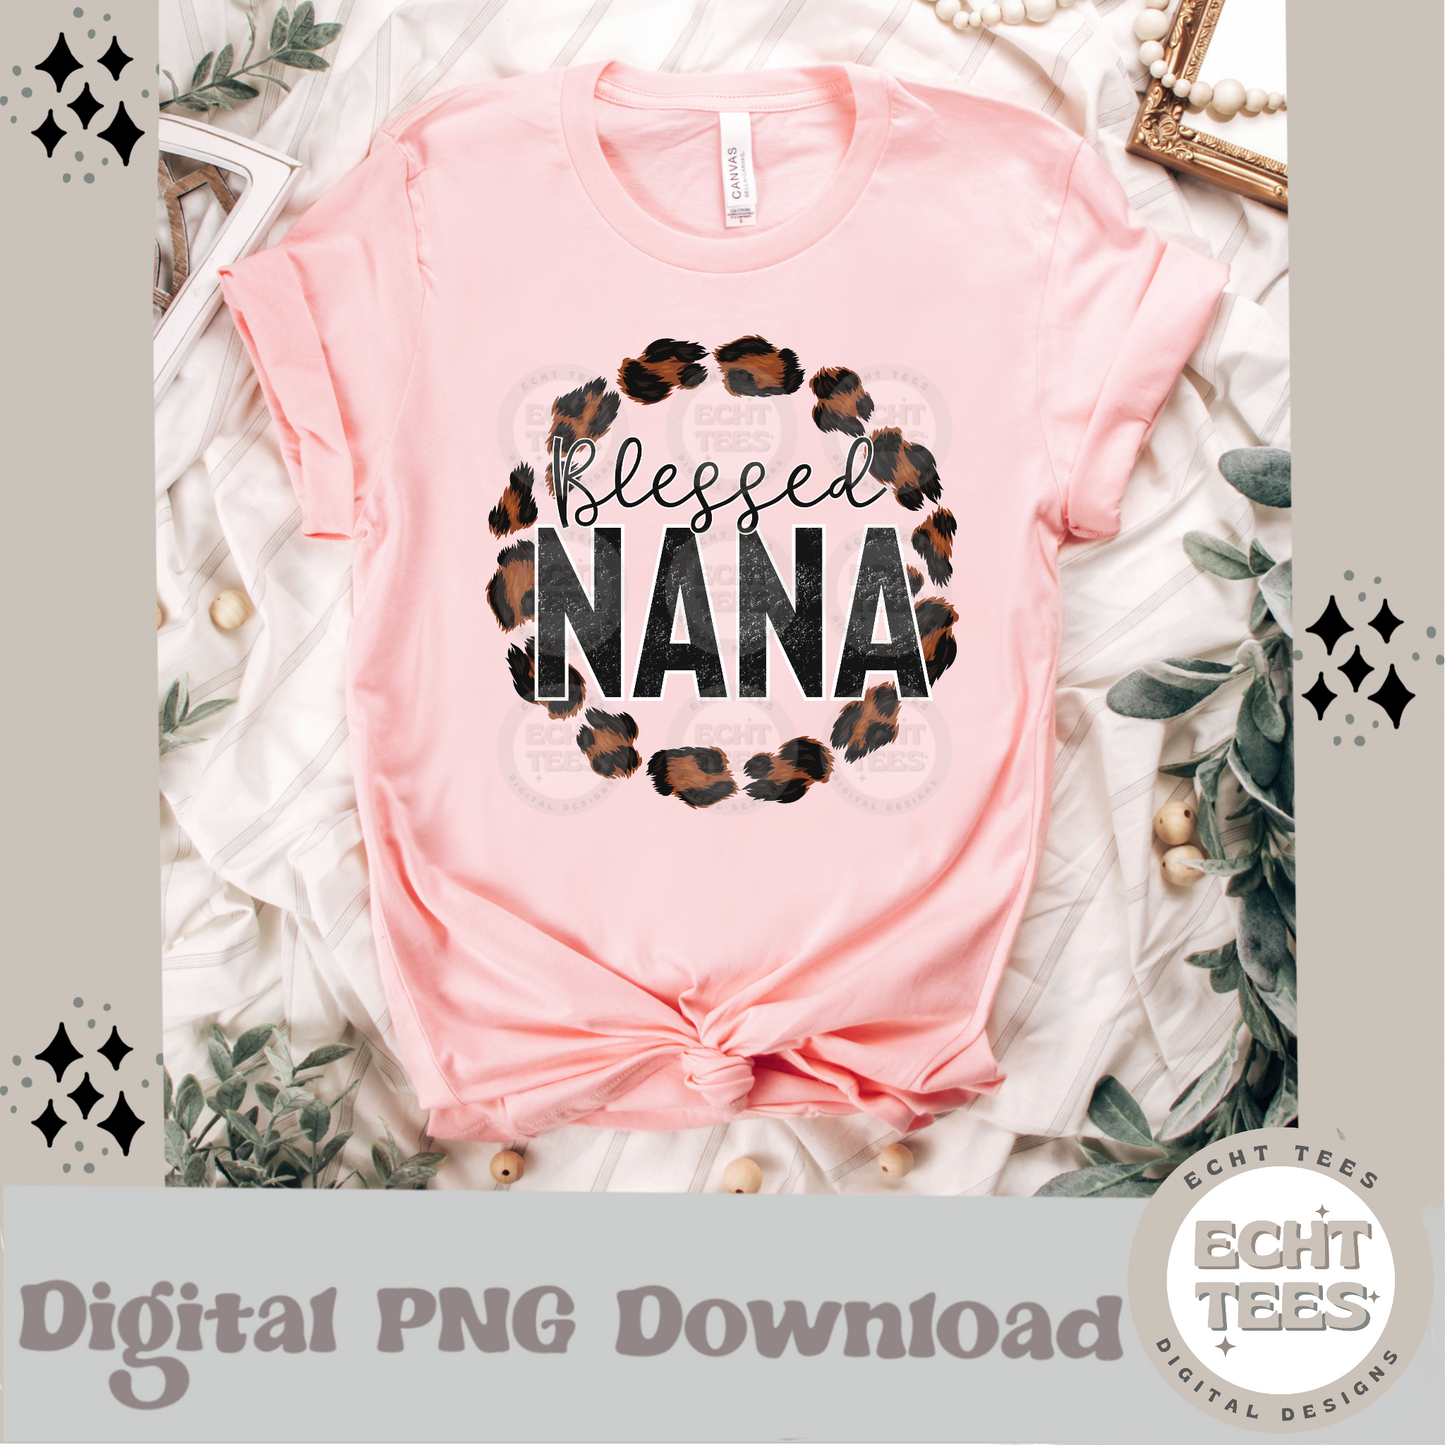 Blessed Nana PNG Digital Download